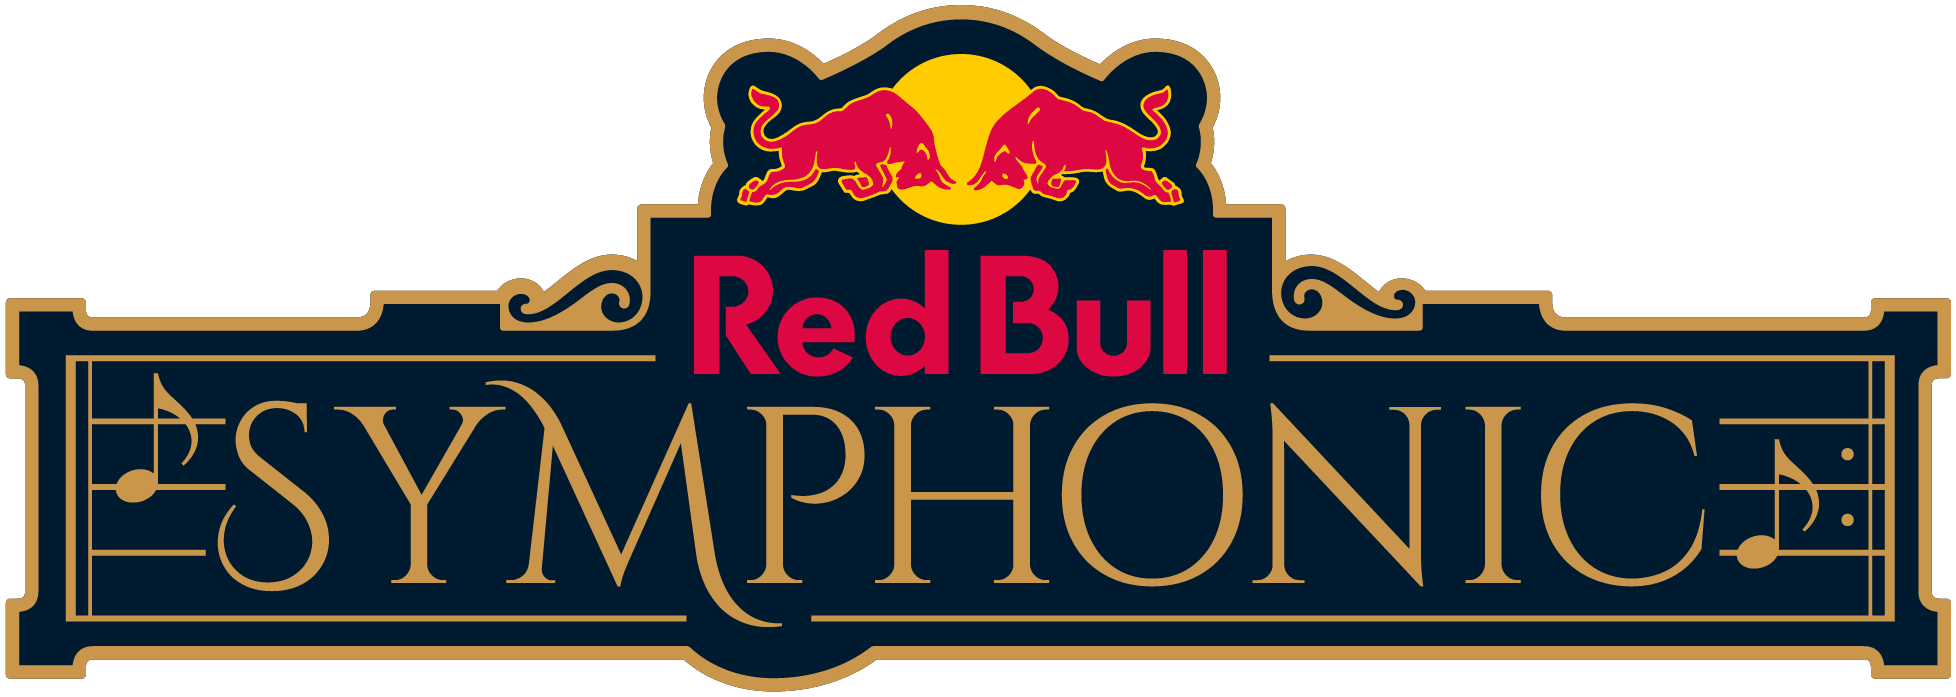 Red Bull Symphonic - Gold